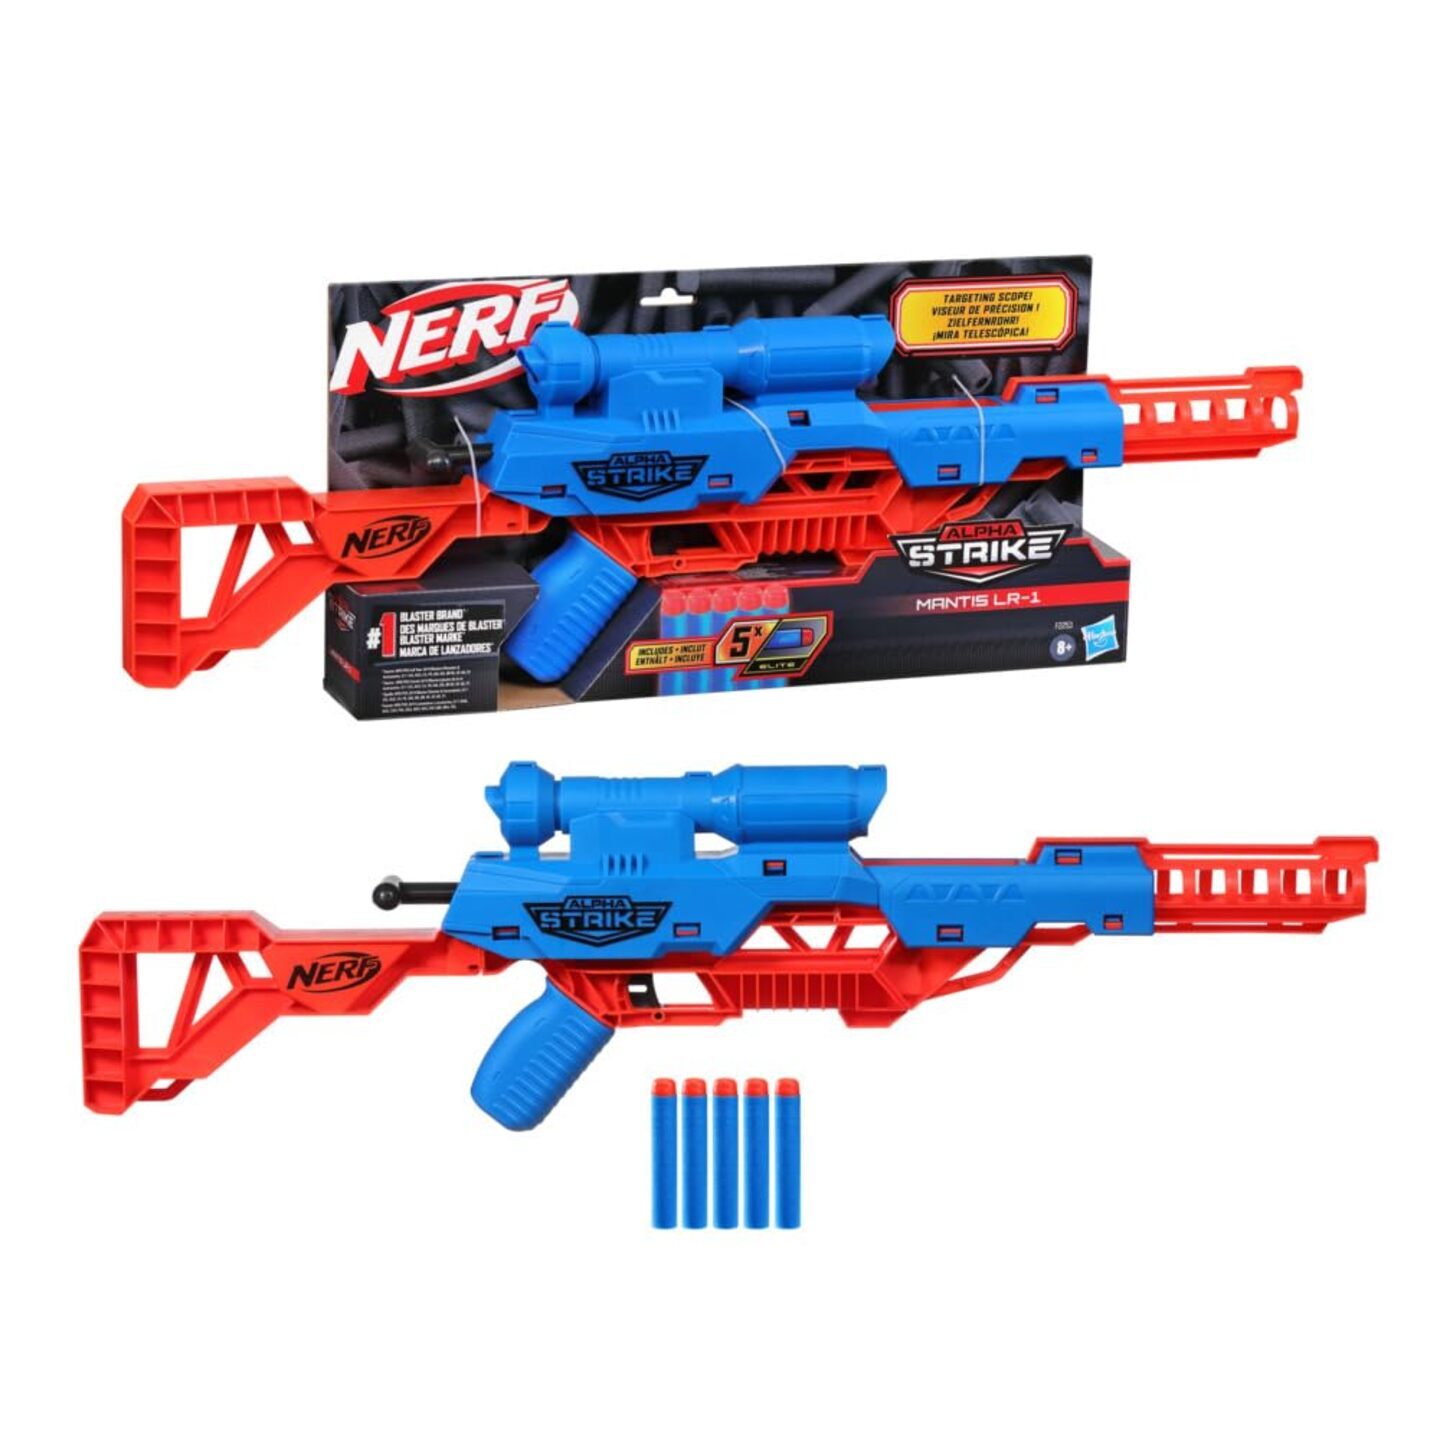 Nerf Alpha Strike Mantis LR-1 Dart Blaster with 5 Official Nerf Elite Foam Darts